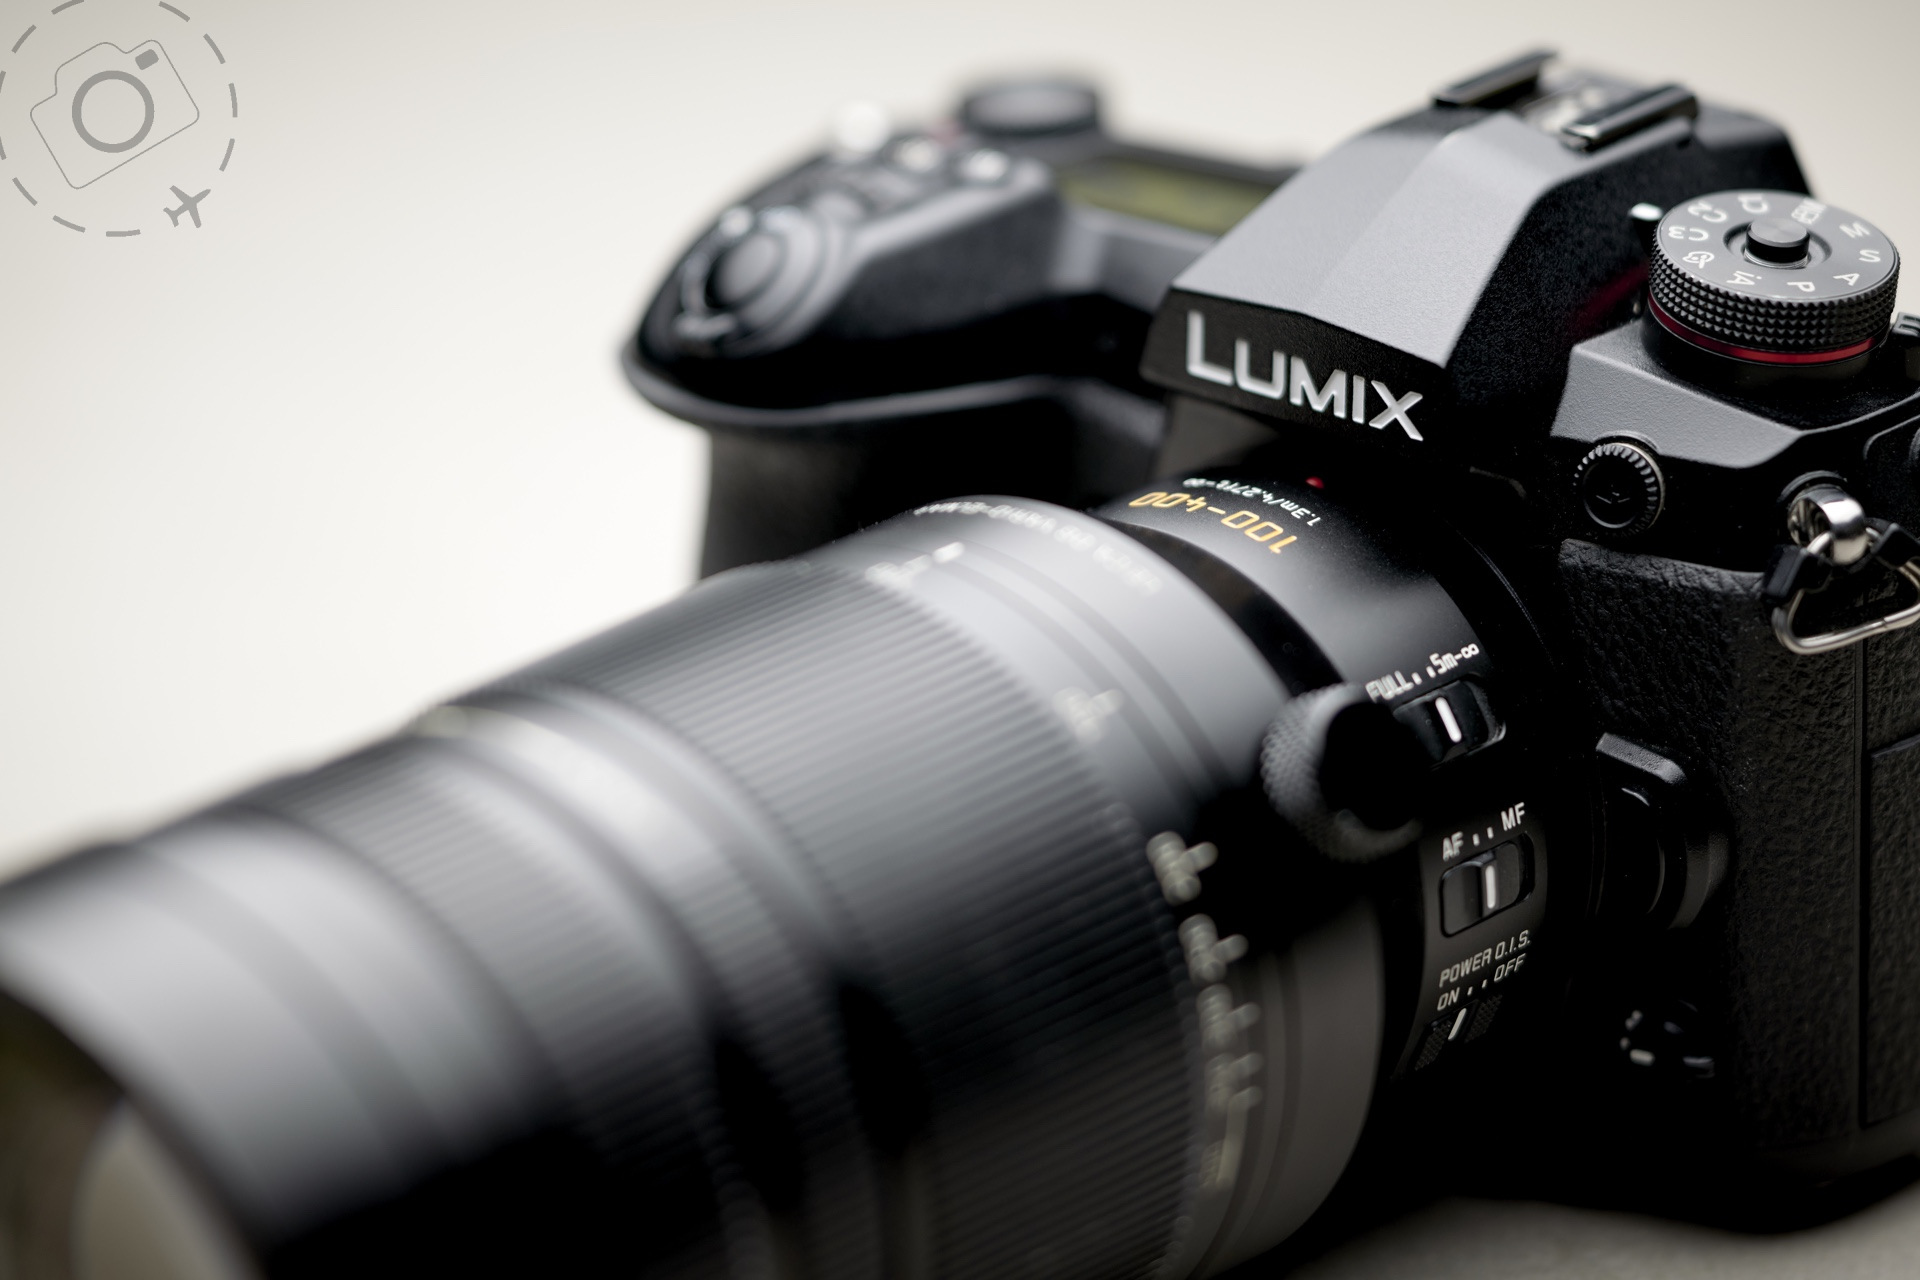 Custom Settings for Lumix G9